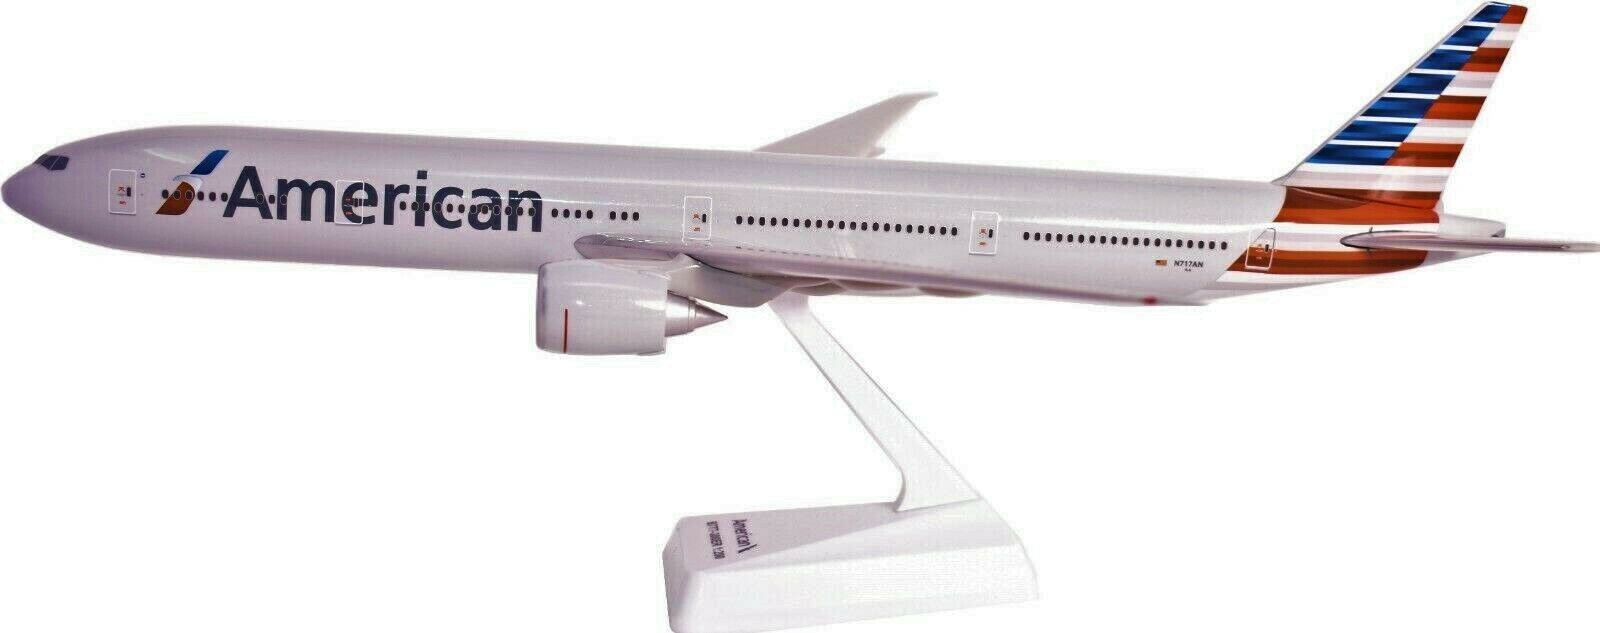 Flight Miniatures American Airlines Boeing 777-300ER Desk Model 1/200 Airplane